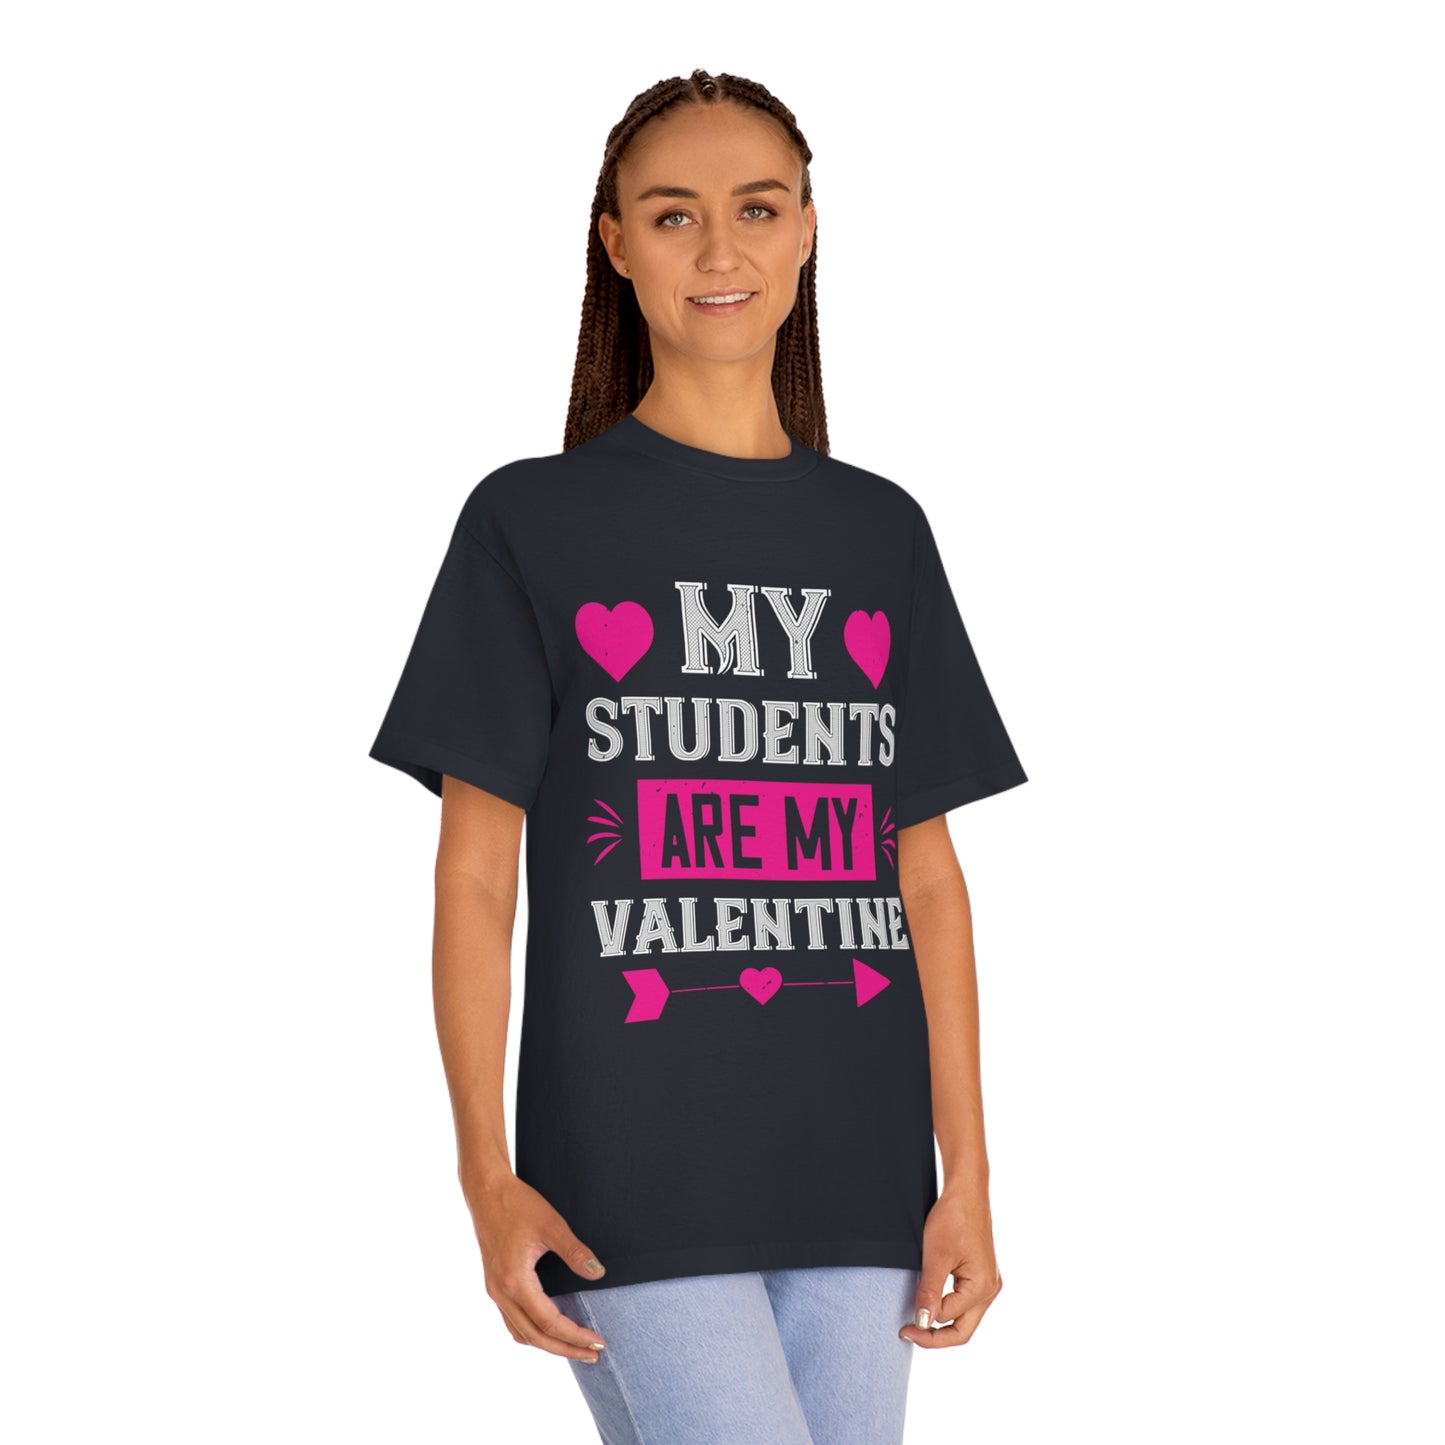 My students are my valentine Unisex Classic Tee